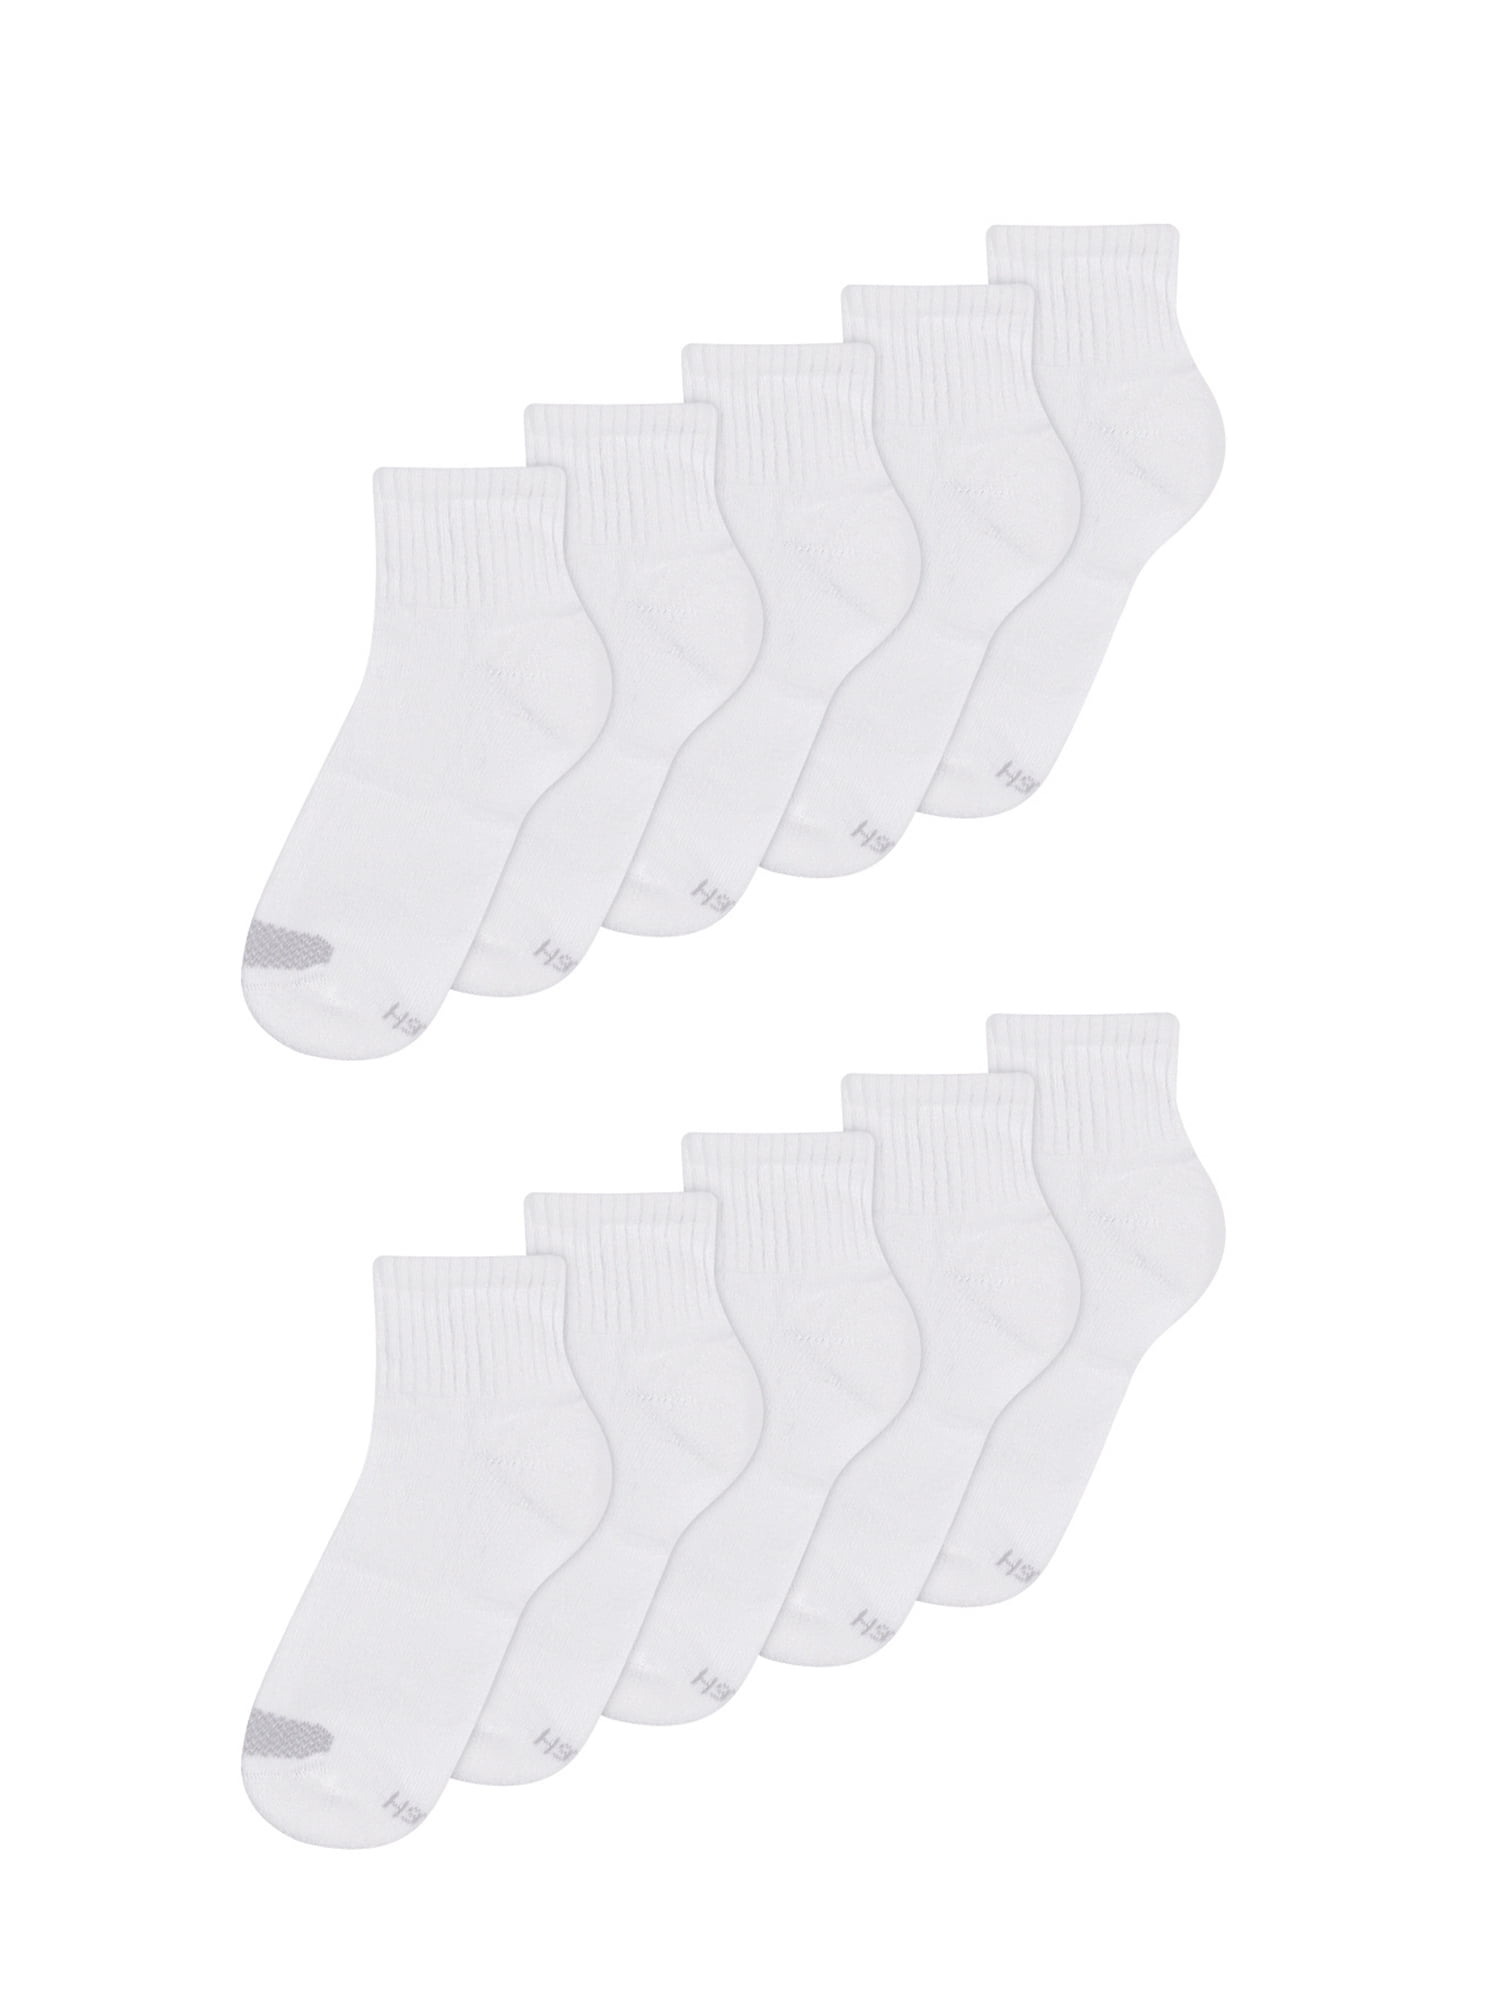 Hanes Women's 10-Pair Value Pack Low Cut Socks Shoe Size 5-9